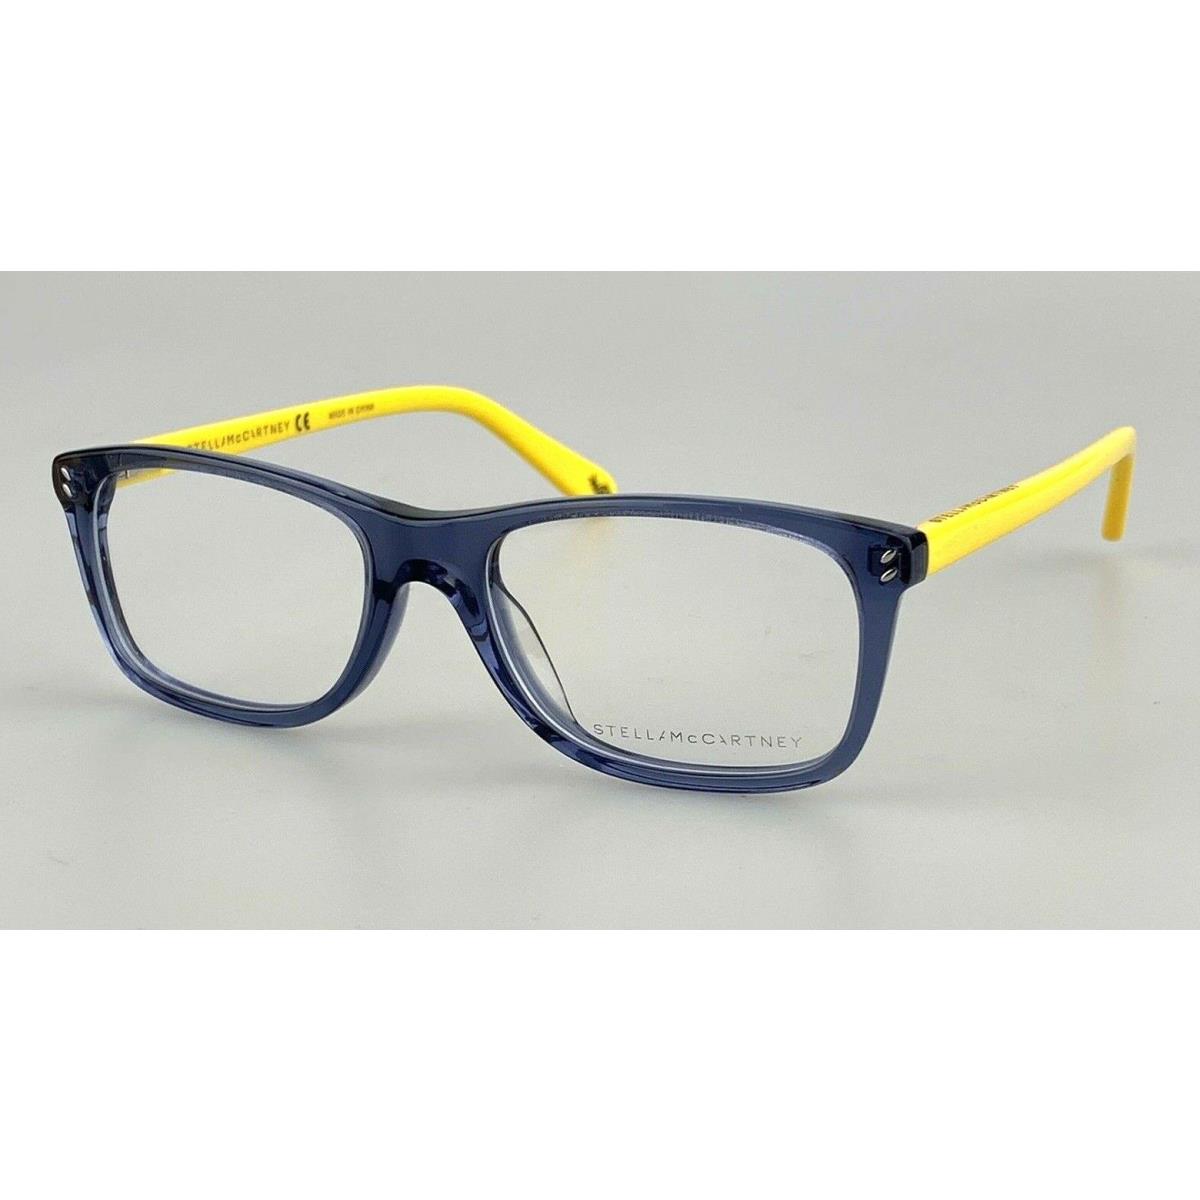 Stella McCartney eyeglasses  - Blue Frame 0